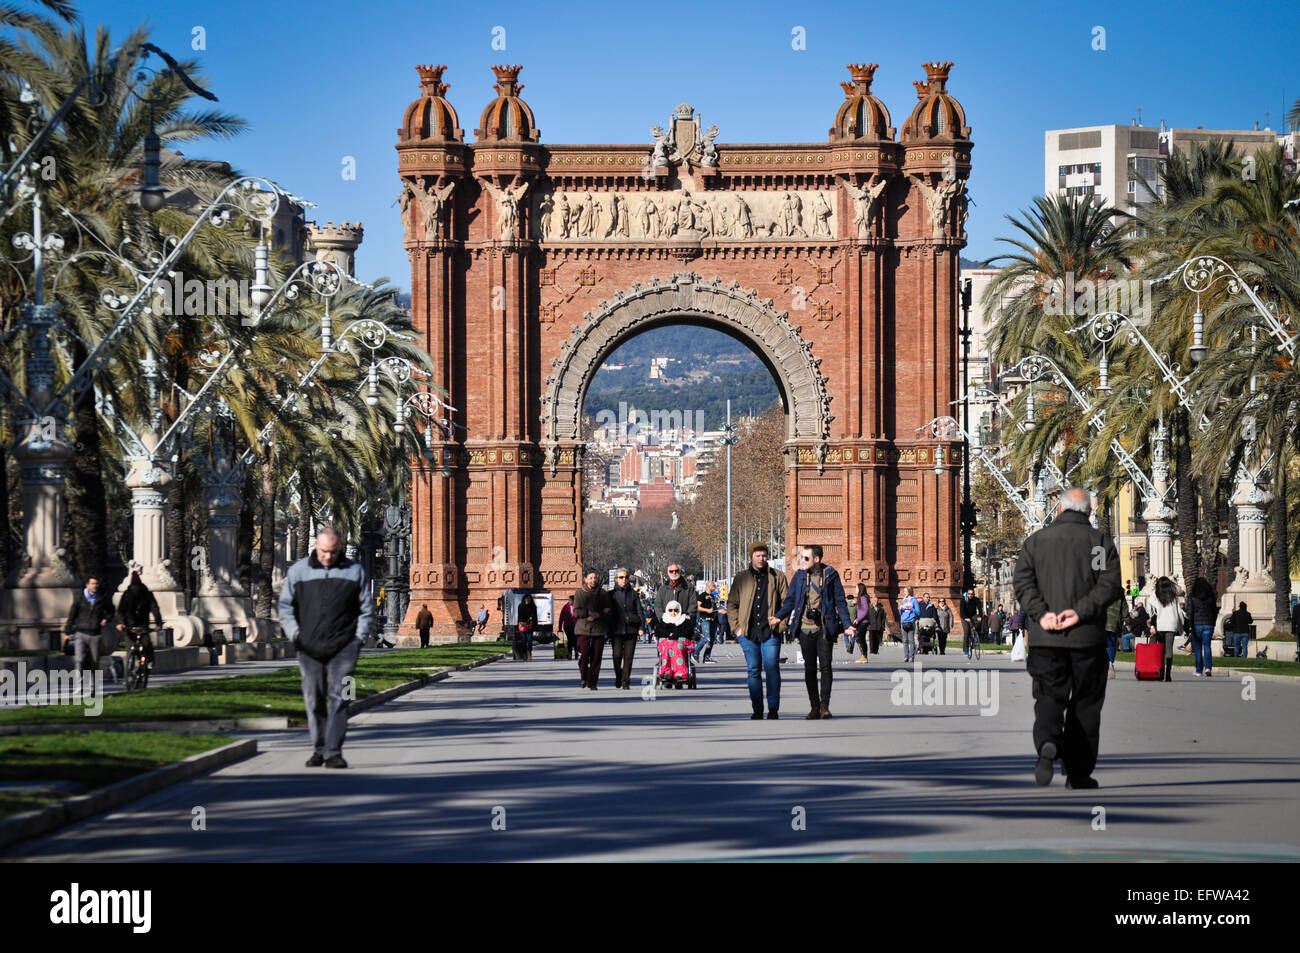 Barcelona Spain Citadel Park triumphal arch Stock Photo